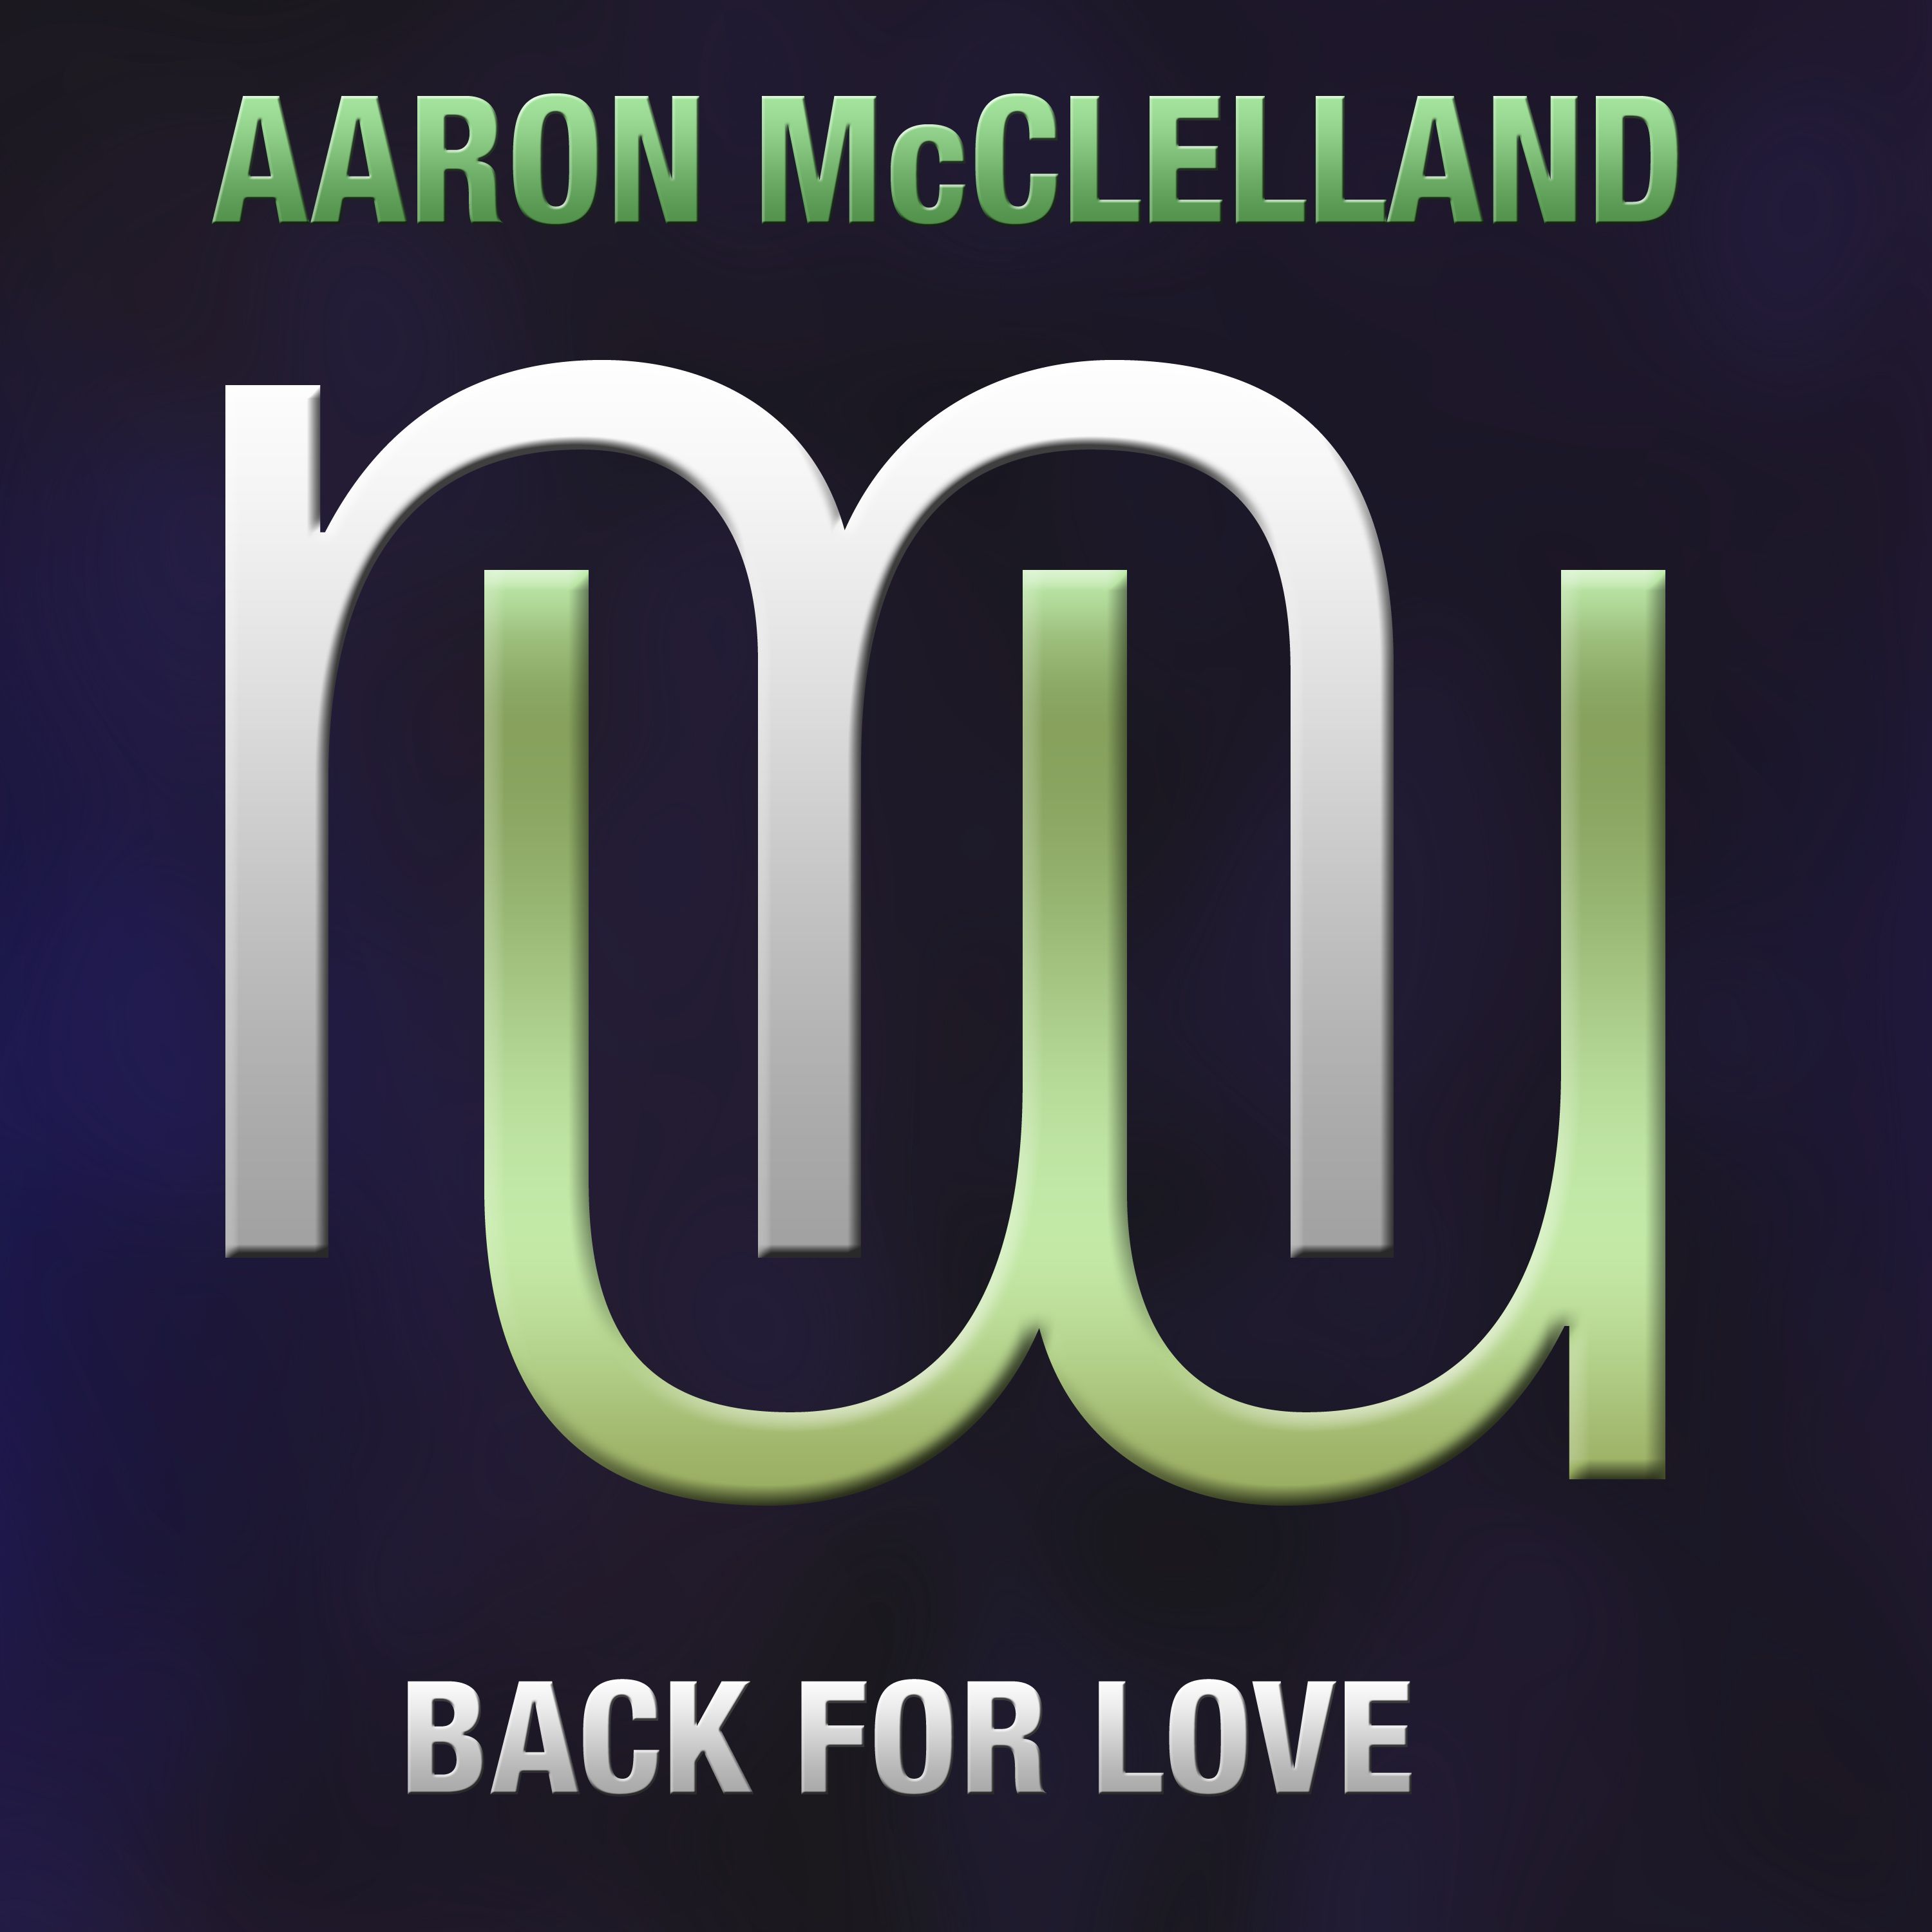 Aaron McClelland Back For Love (Radio Edit) on ALL music platforms